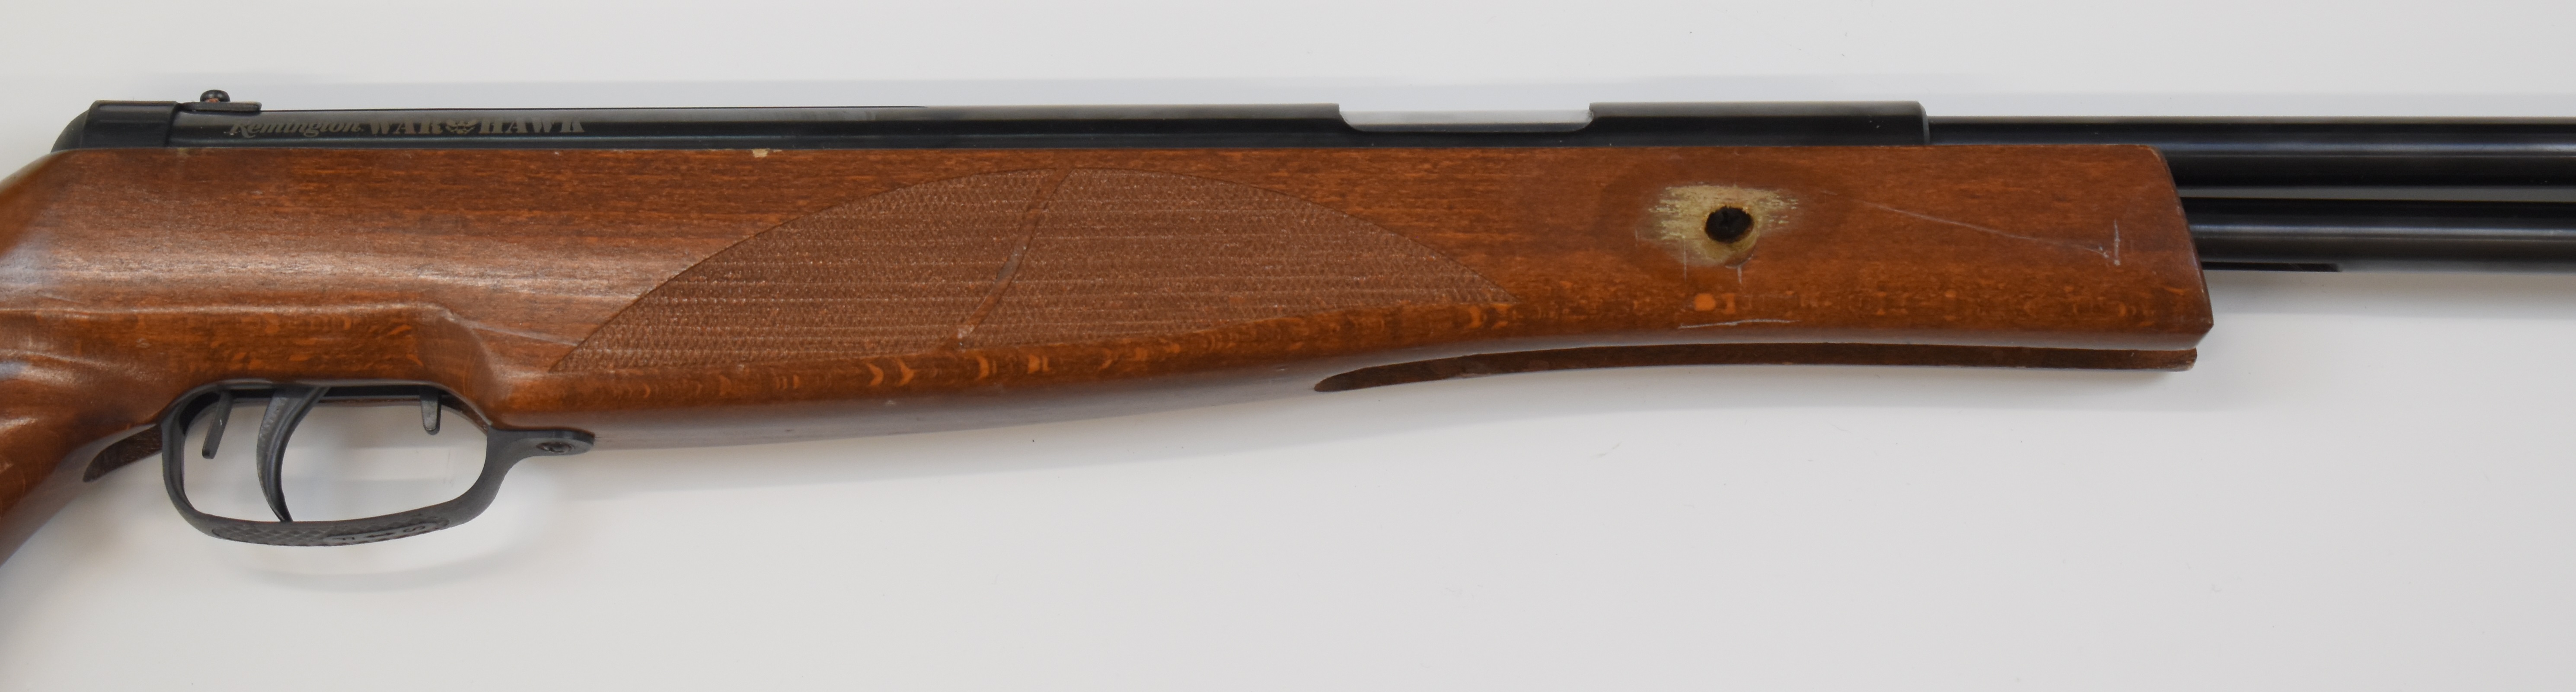 Remington Warhawk .177 under-lever air rifle with textured semi-pistol grip, raised cheek piece - Image 4 of 11